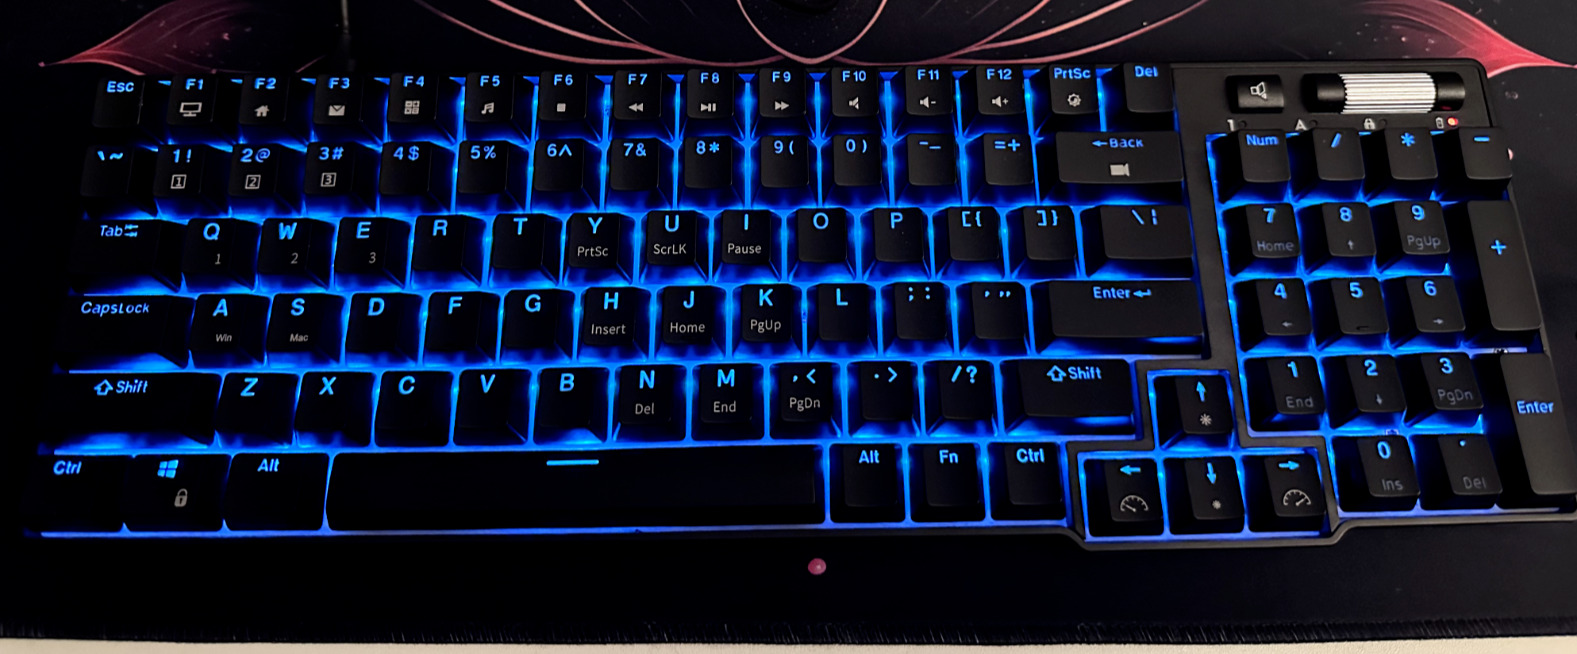 RK ROYAL KLUDGE Swappable Mechanical Keyboard Blue Backlight RK96 - Black No USB